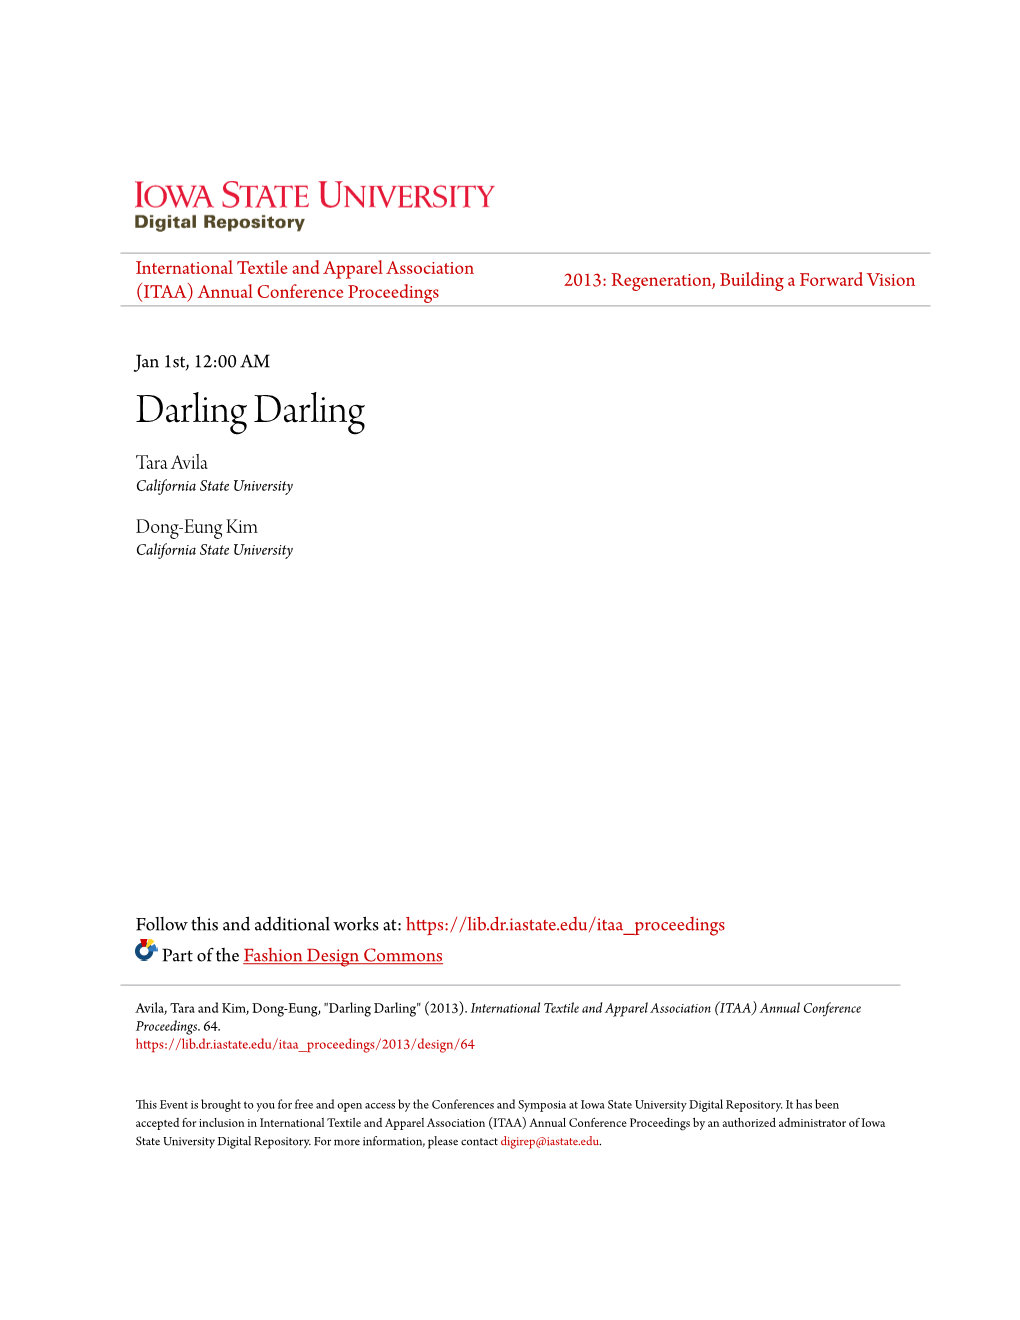 Darling Darling Tara Avila California State University